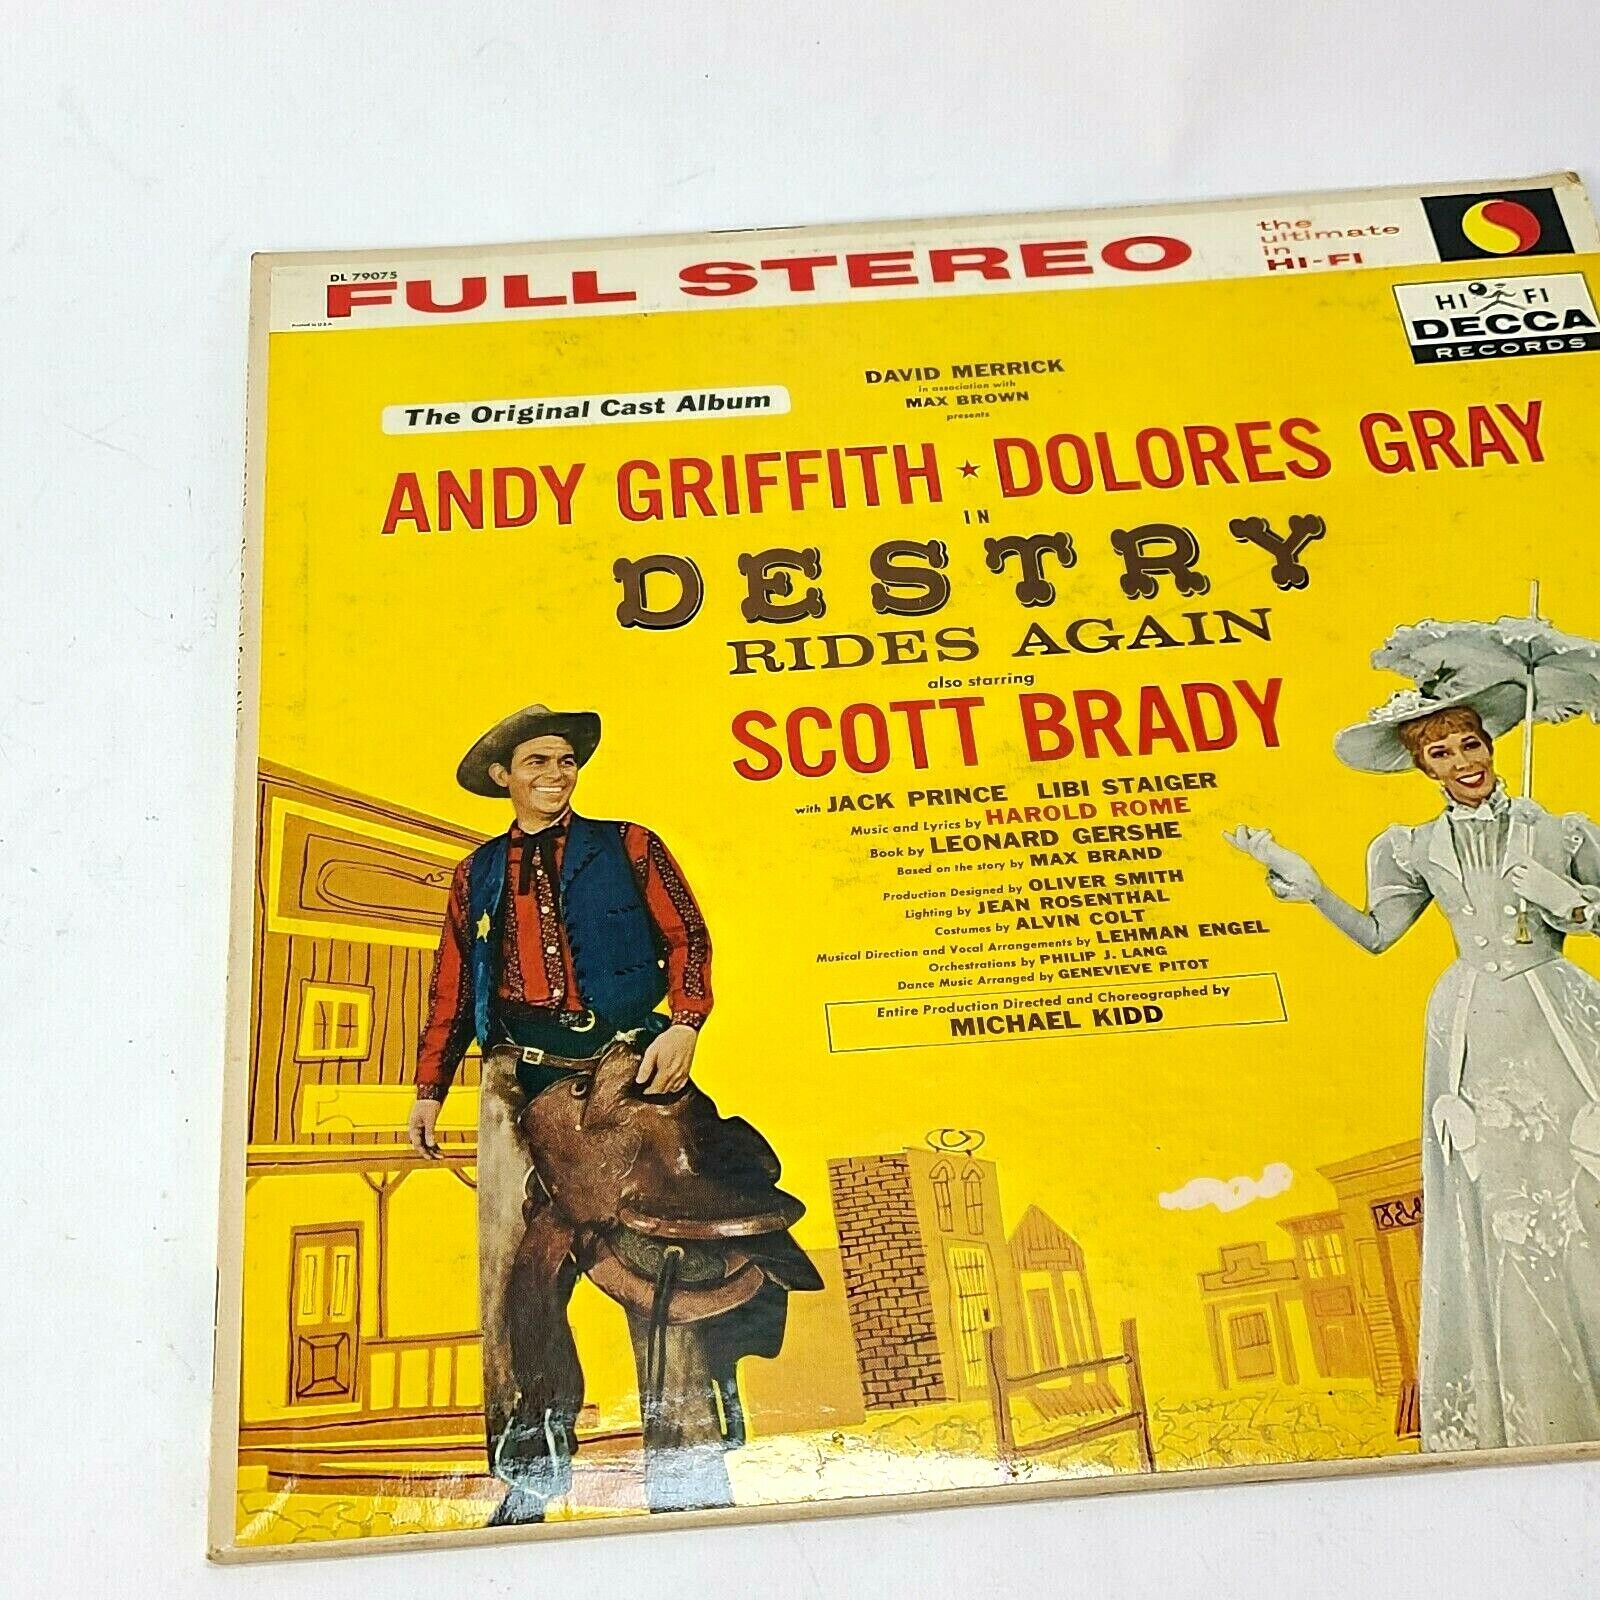 VTG Destry Rides Again 1959 Soundtrack LP Andy Griffith Dolores Gray Scott Brady